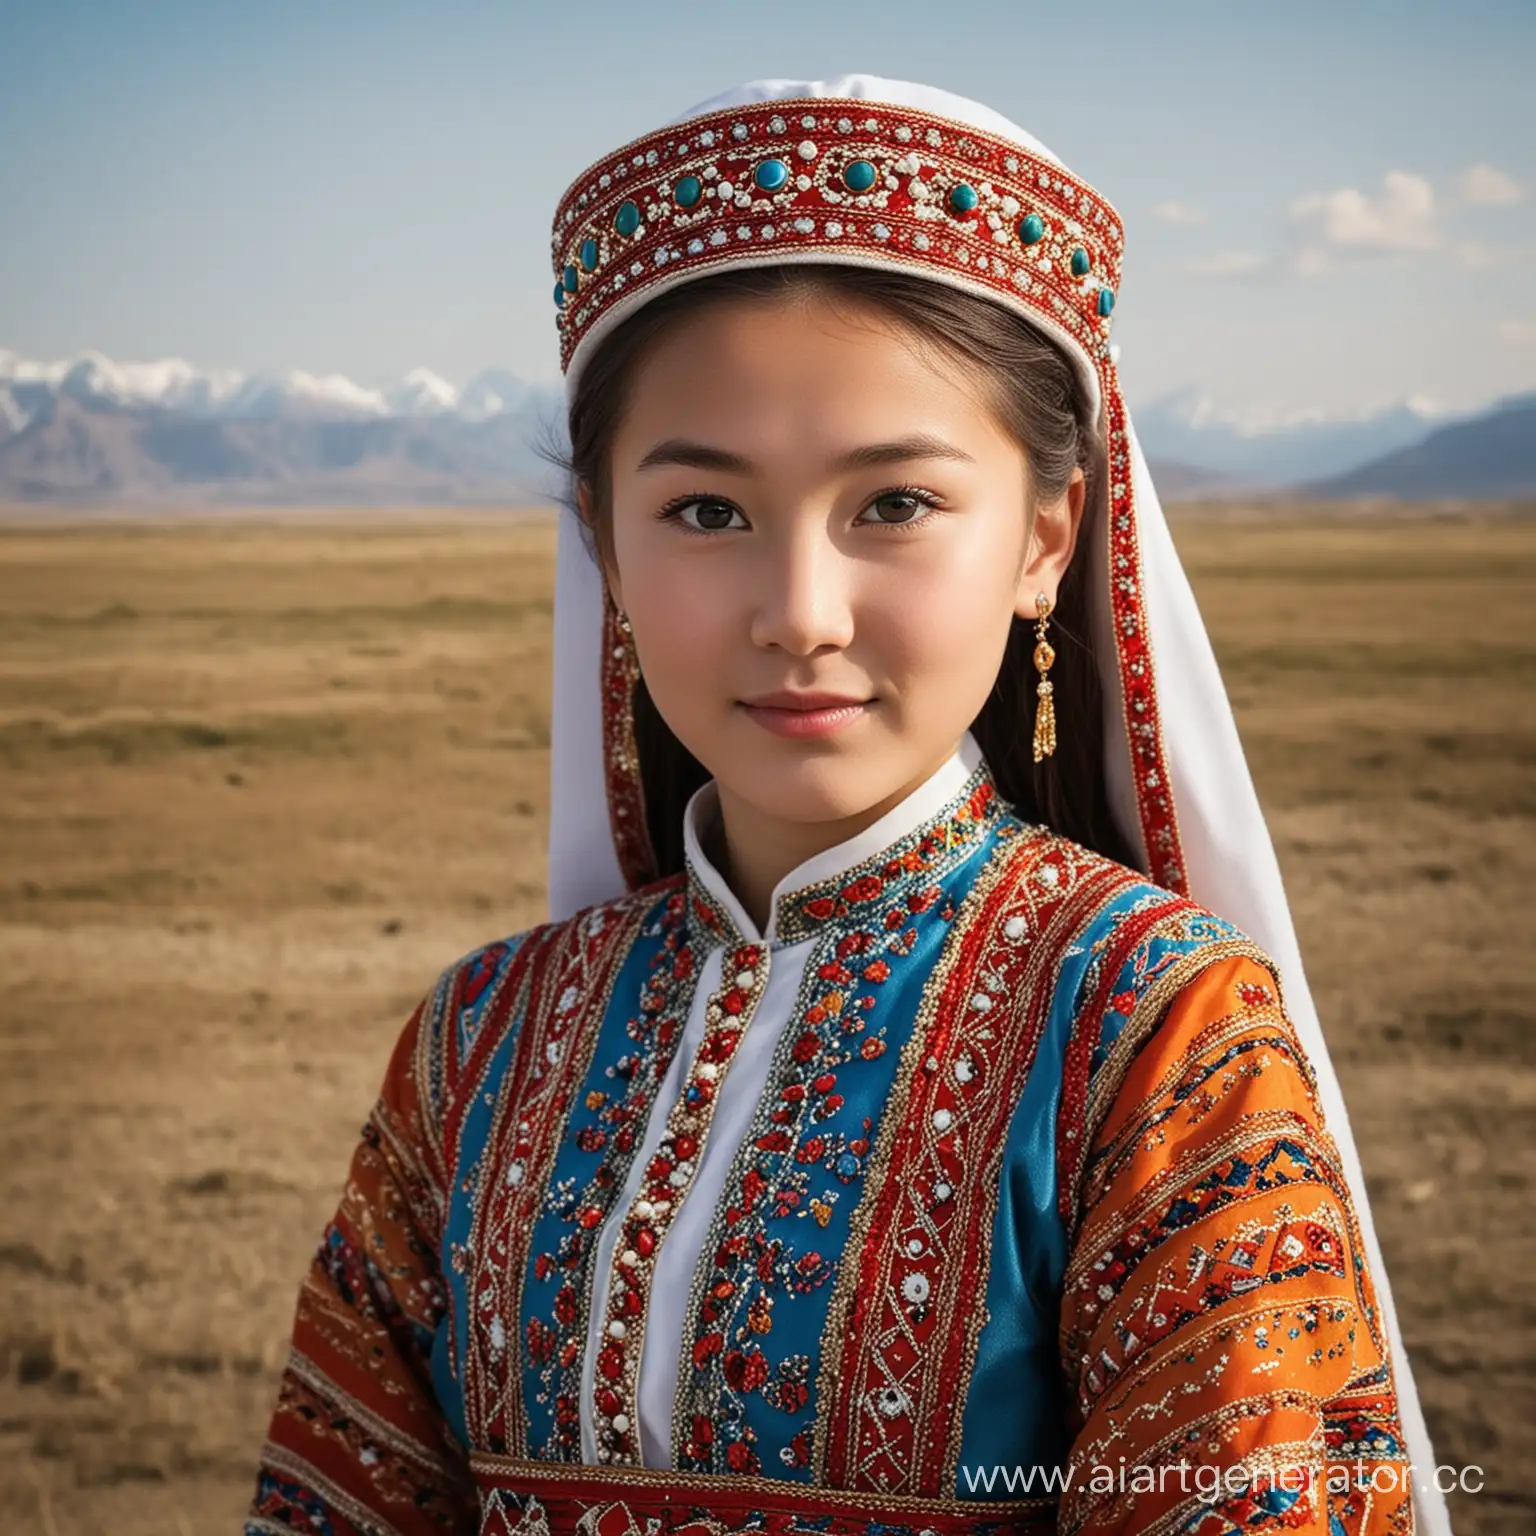 Kazakh-Girl-in-Traditional-Attire-Cultural-Heritage-Portrait